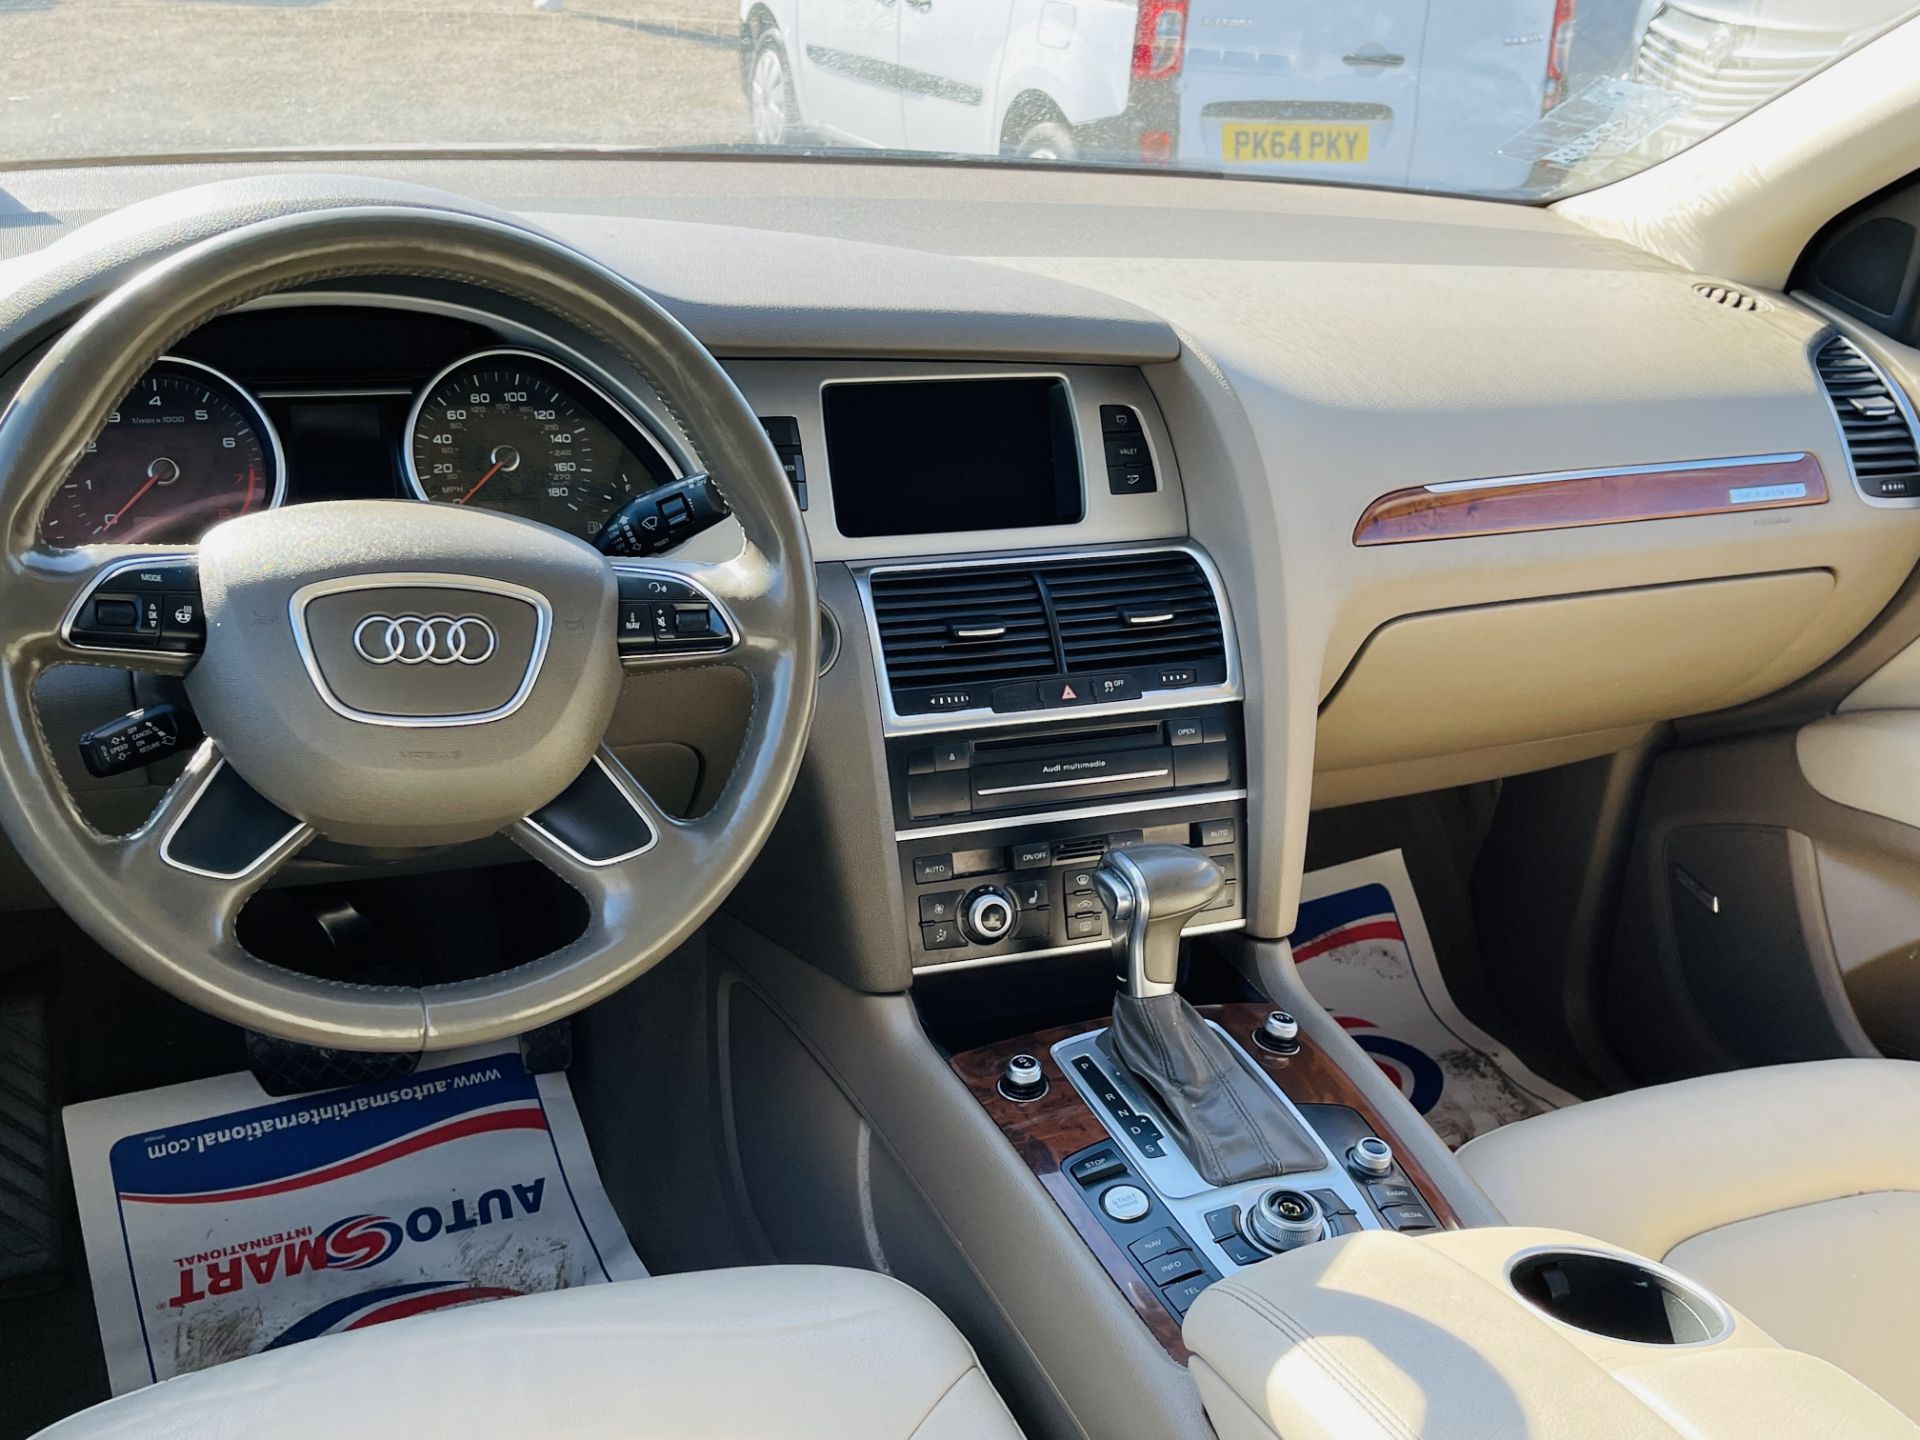 ** ON SALE ** Audi Q7 Premium Plus 3.0L T V6 SuperCharged Quattro ' 2015 Year' - 7 Seater - ULEZ - Image 23 of 46